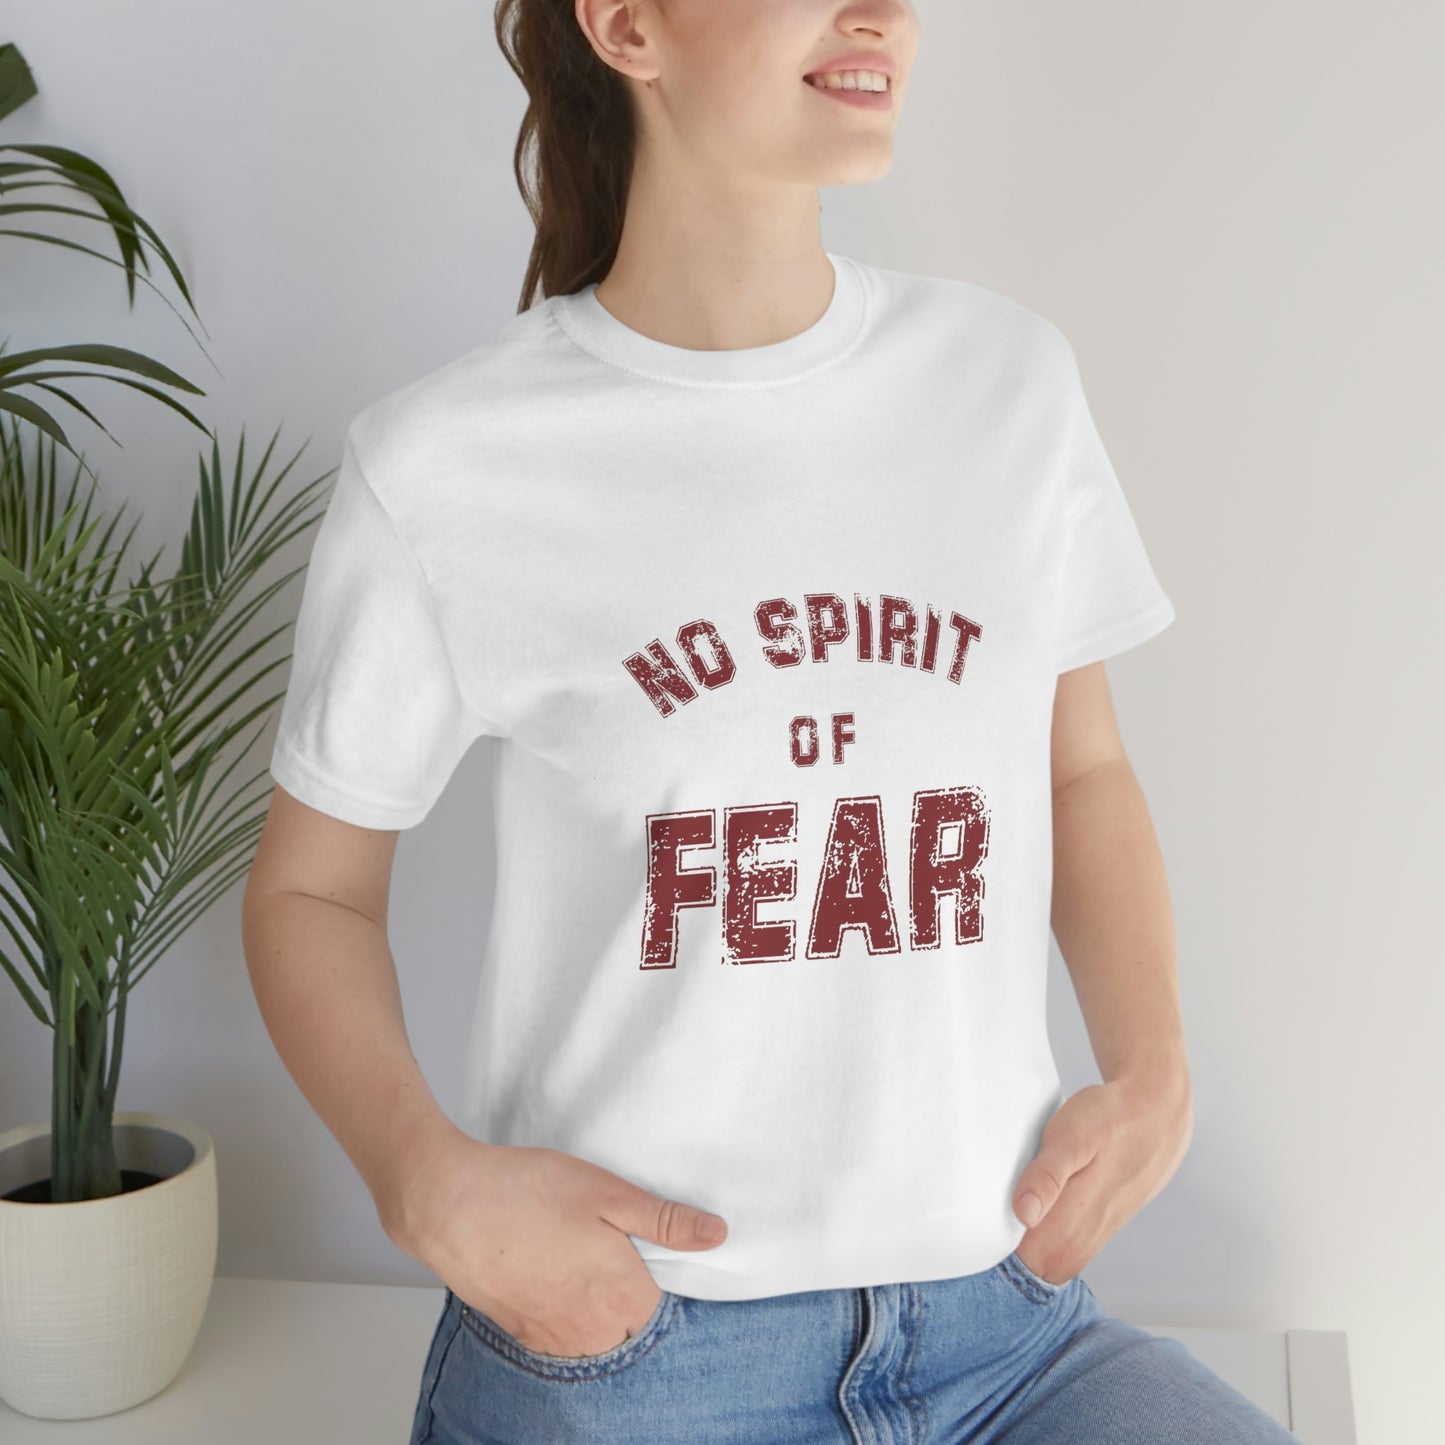 No Spirit of Fear (Men's)